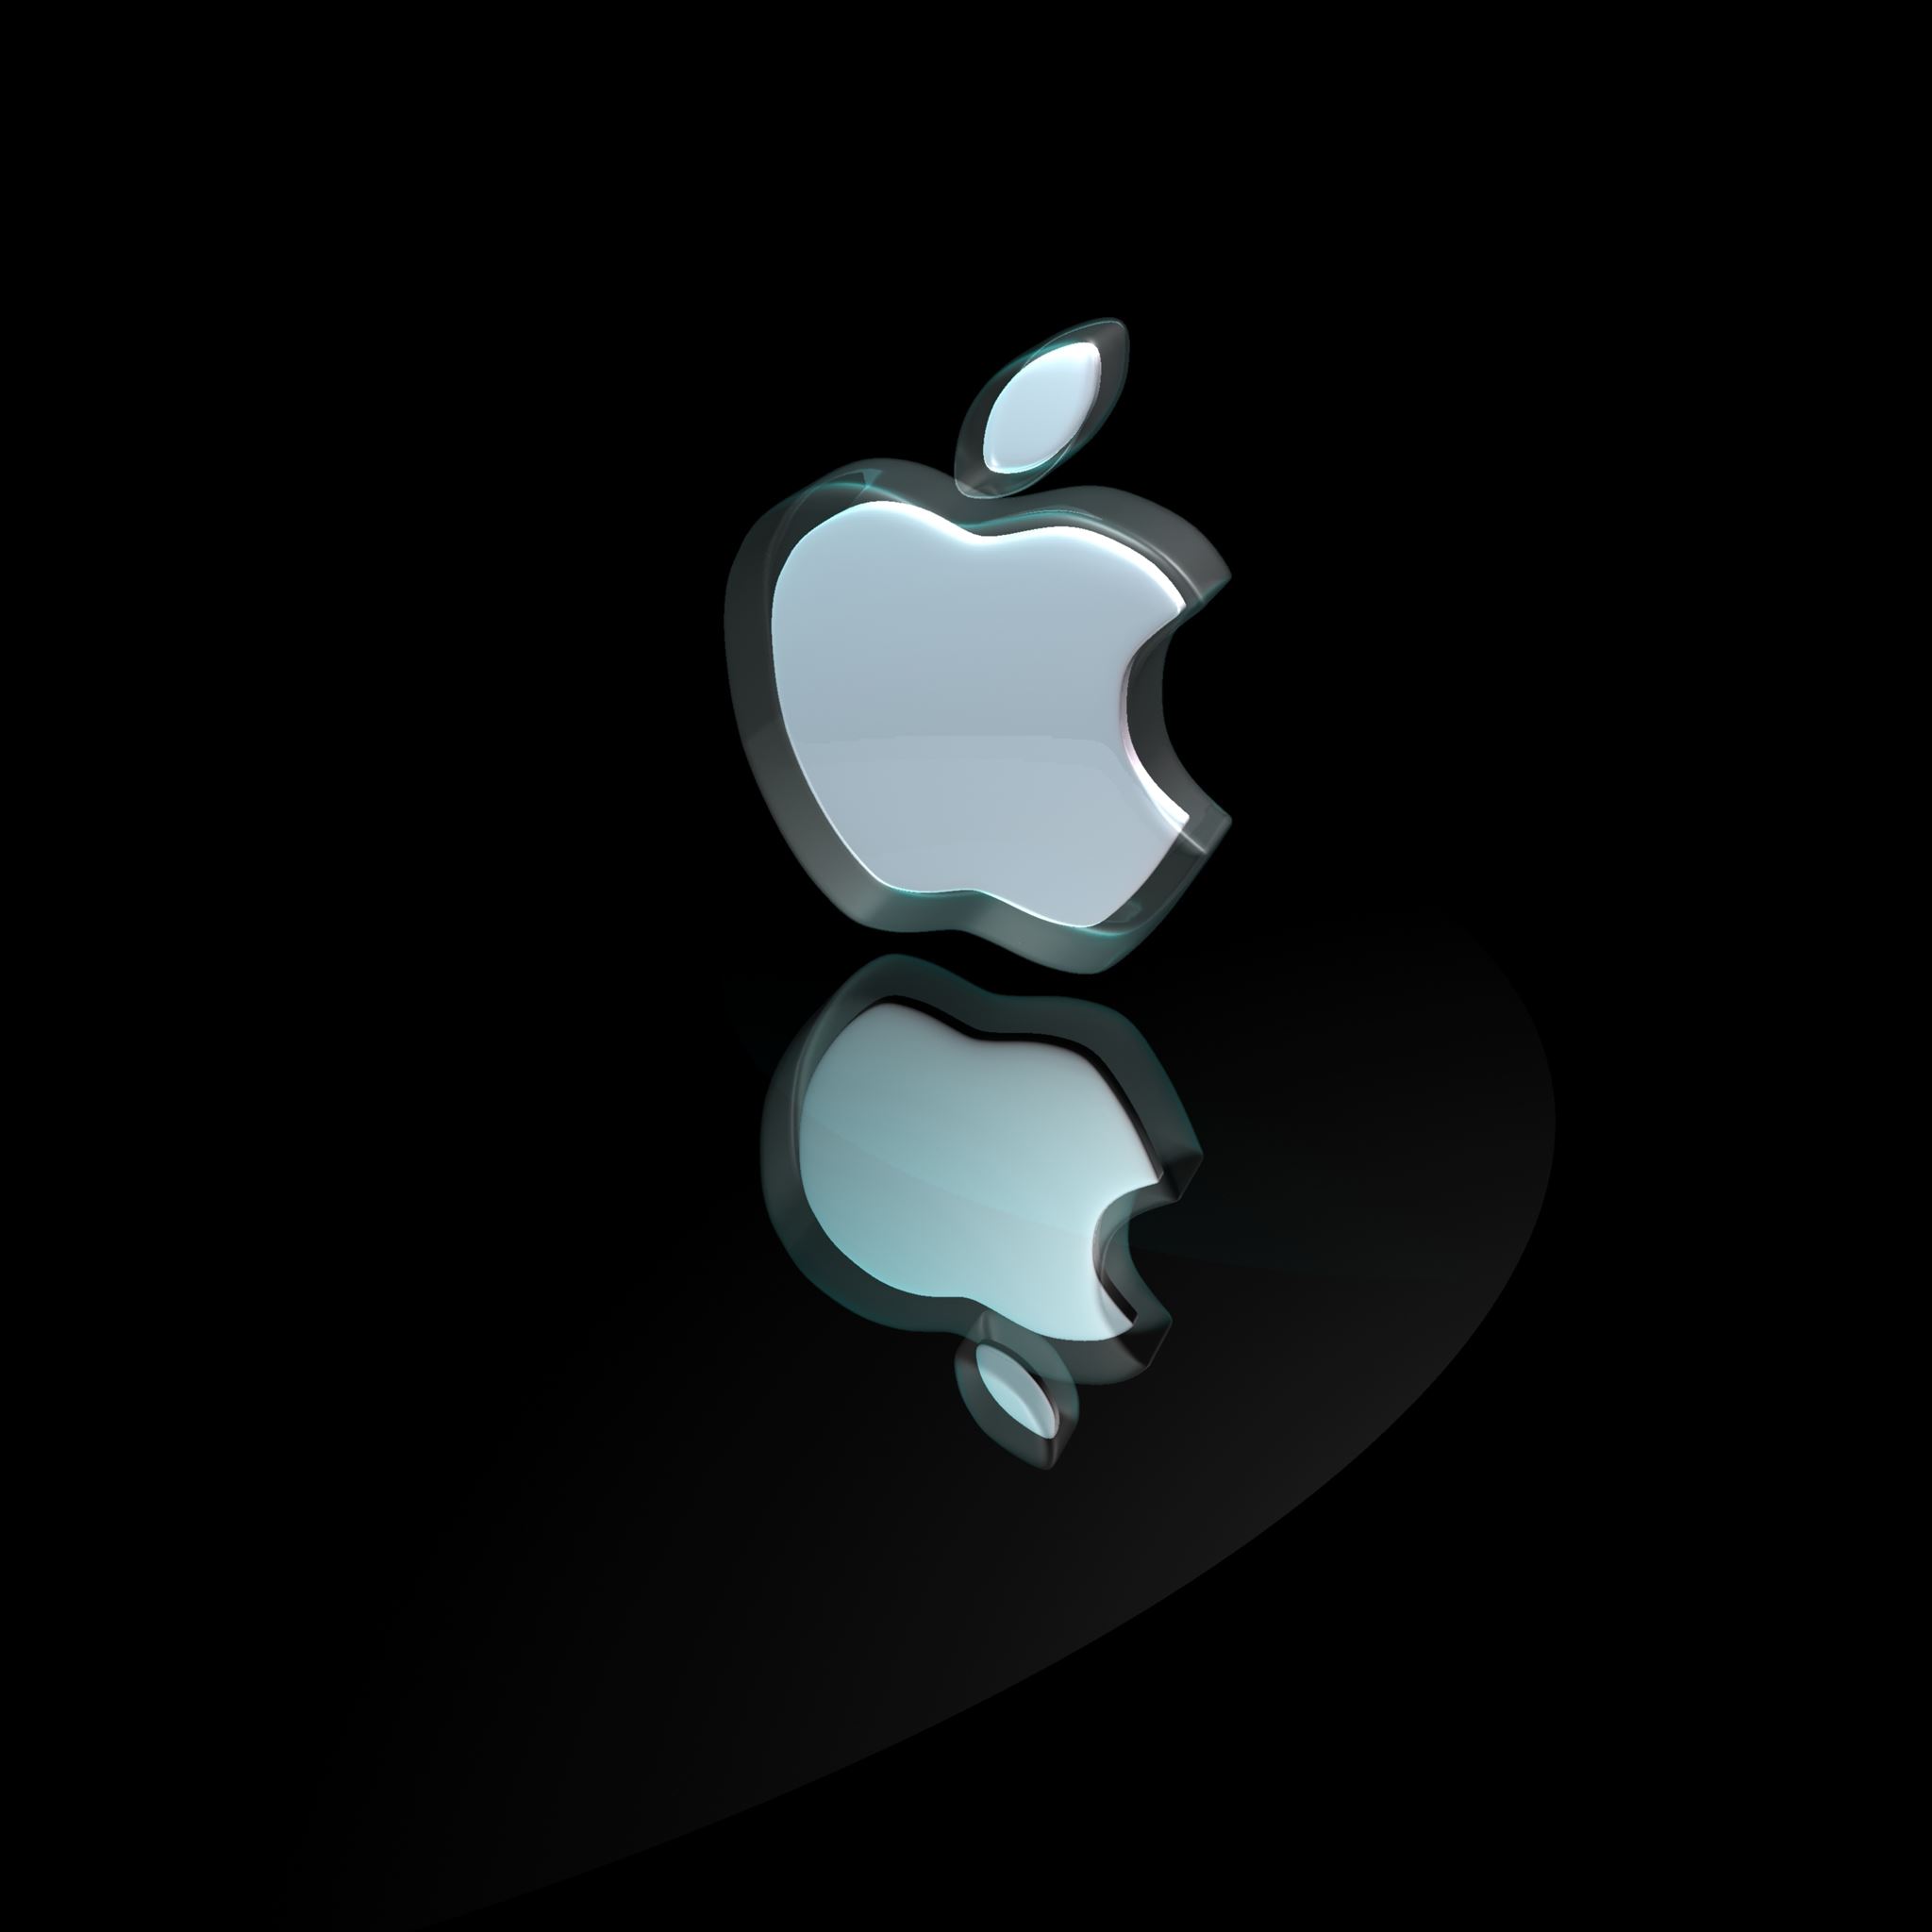 3d Apple Logo Ipad Air Wallpapers Free Download